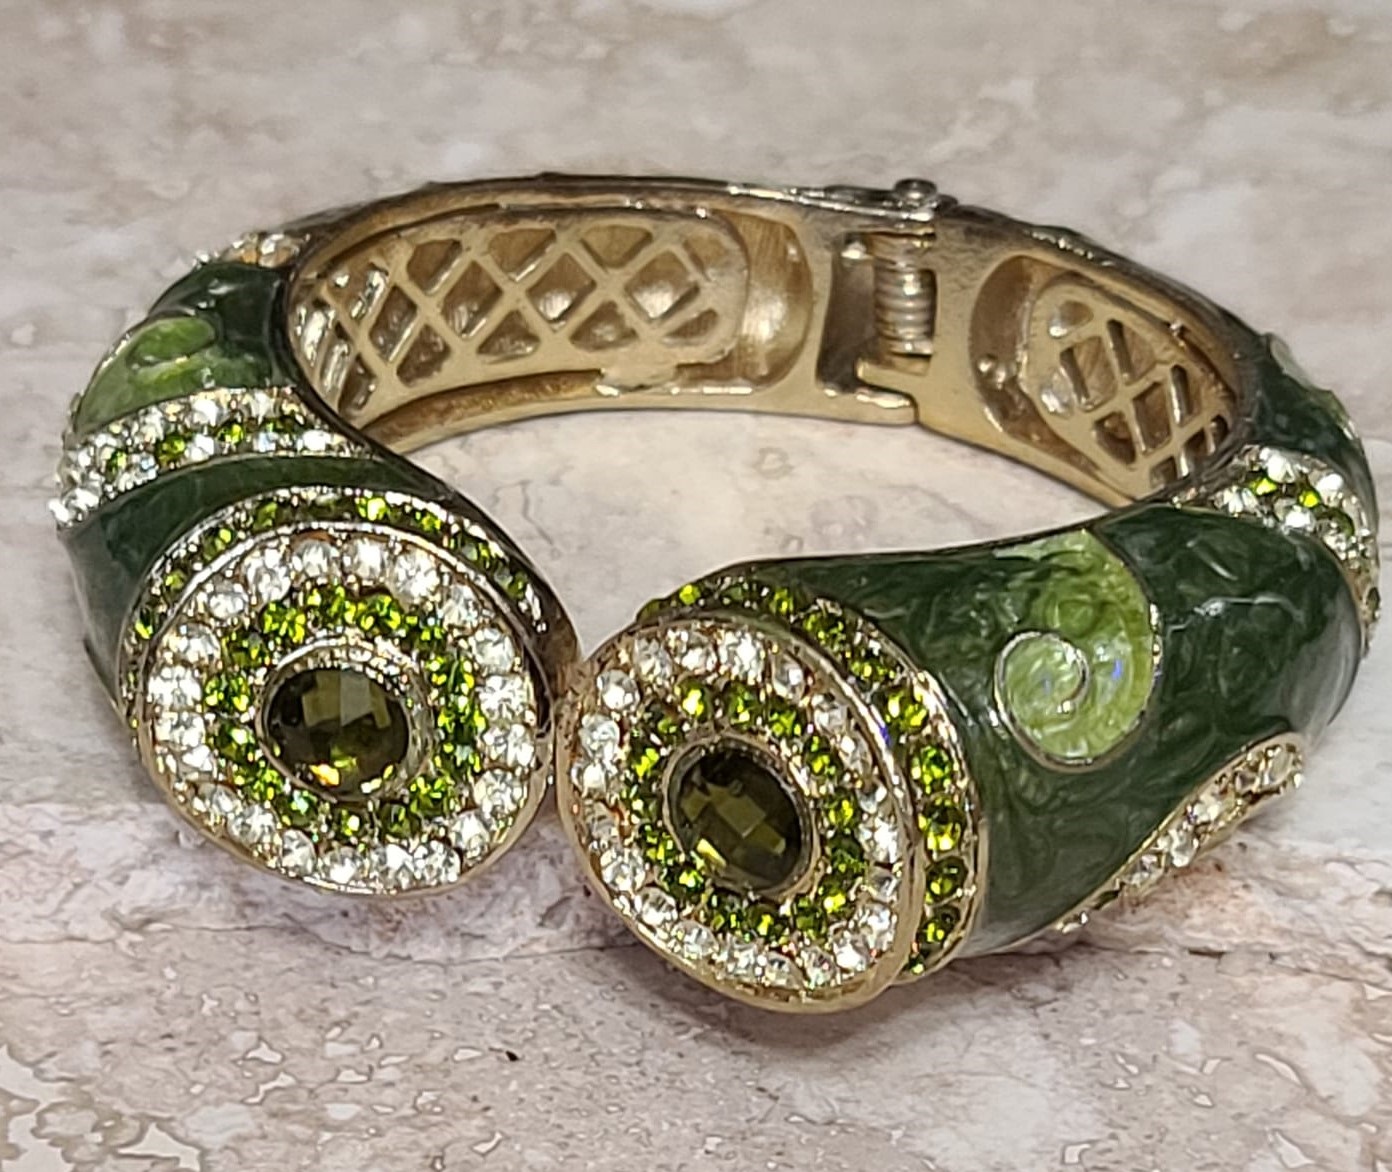 Rhinestones & Green Enamel Foldover Bracelet